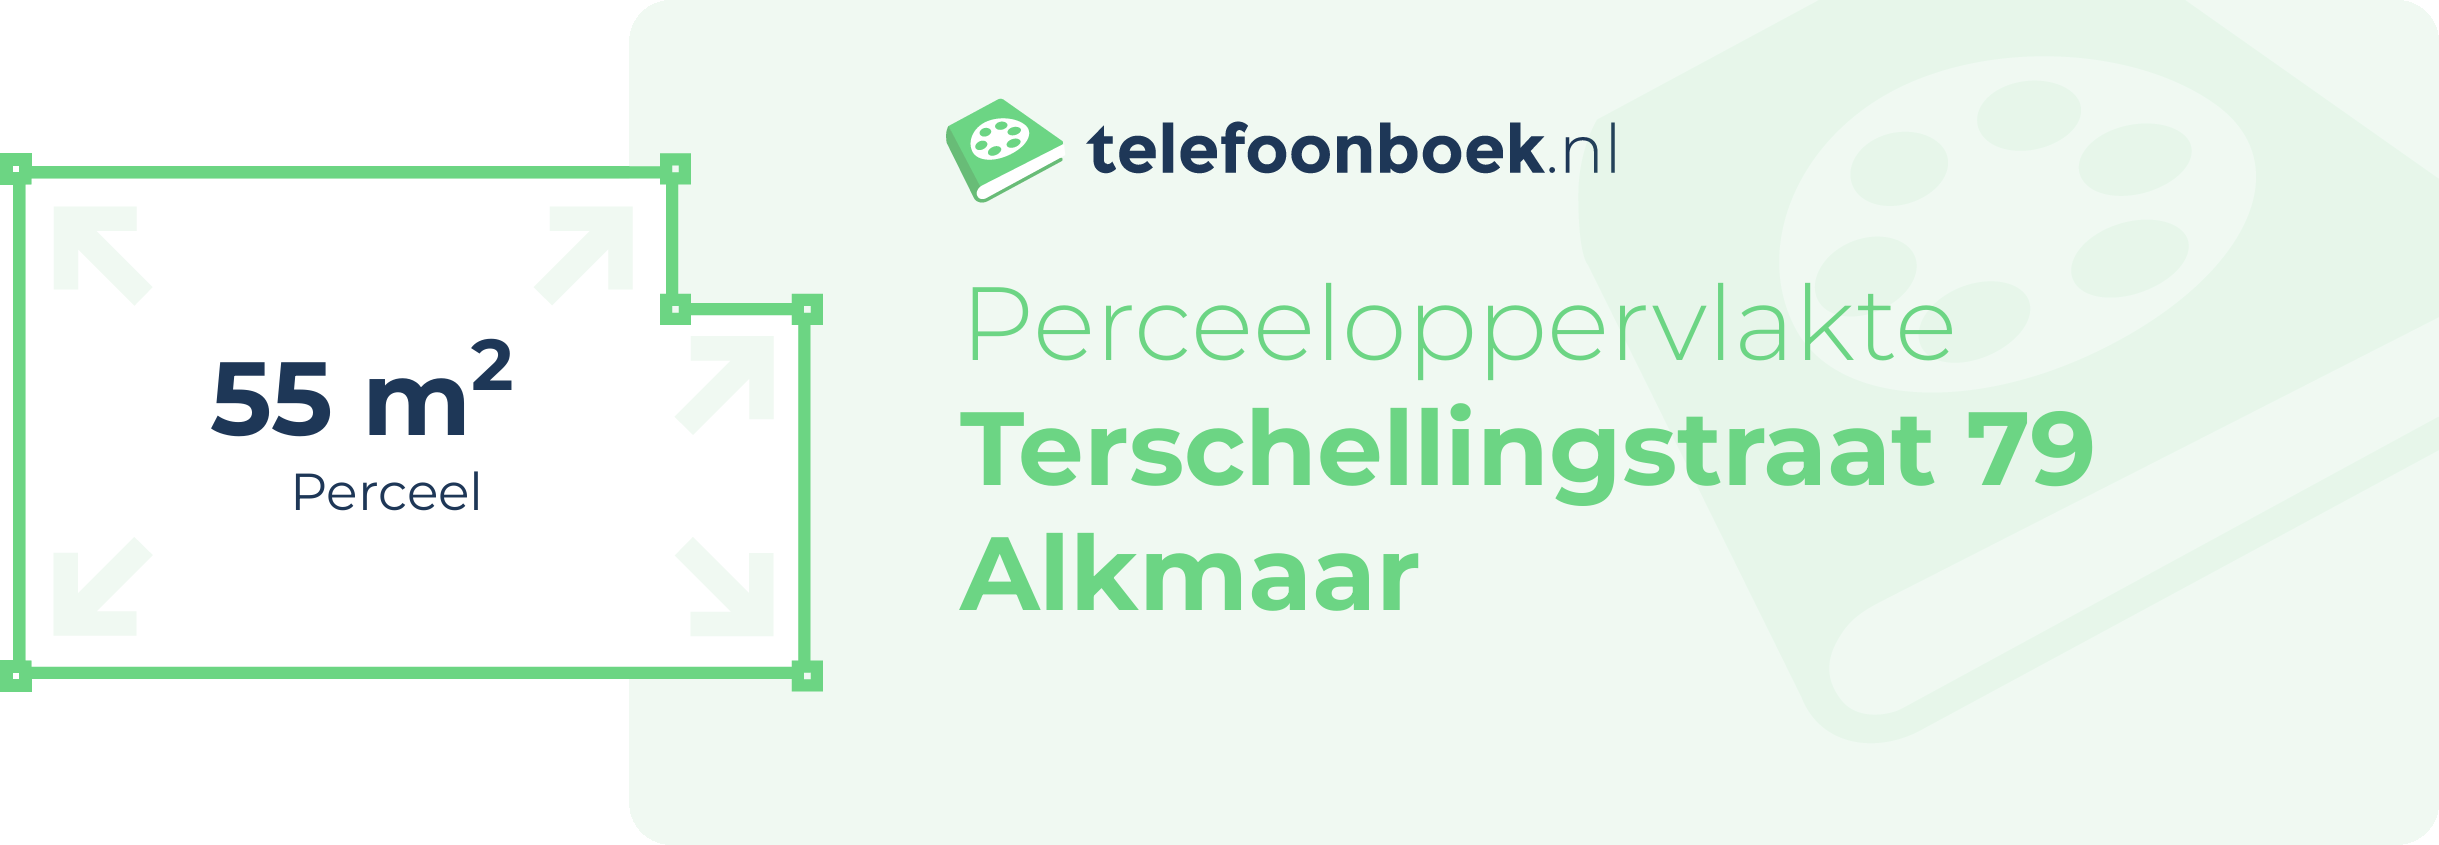 Perceeloppervlakte Terschellingstraat 79 Alkmaar